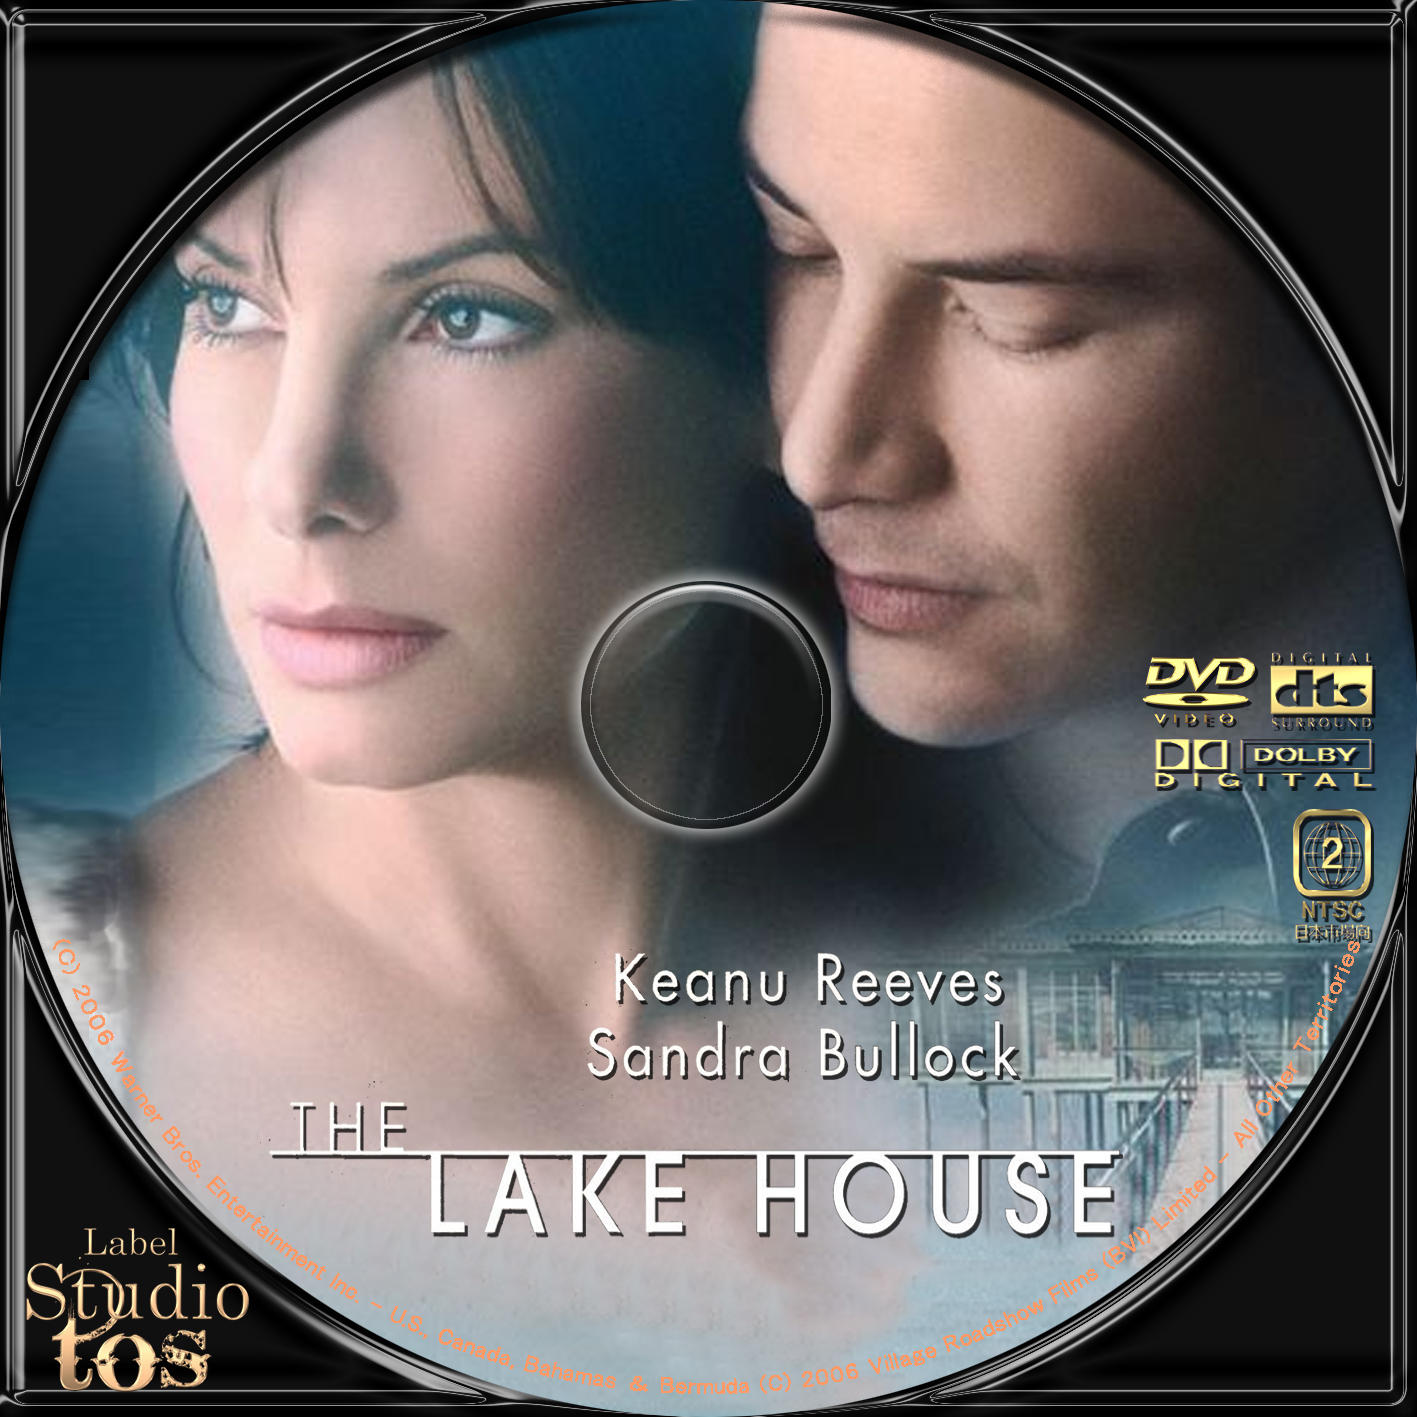 The.Lake.House. (2006) Sandra Bullock